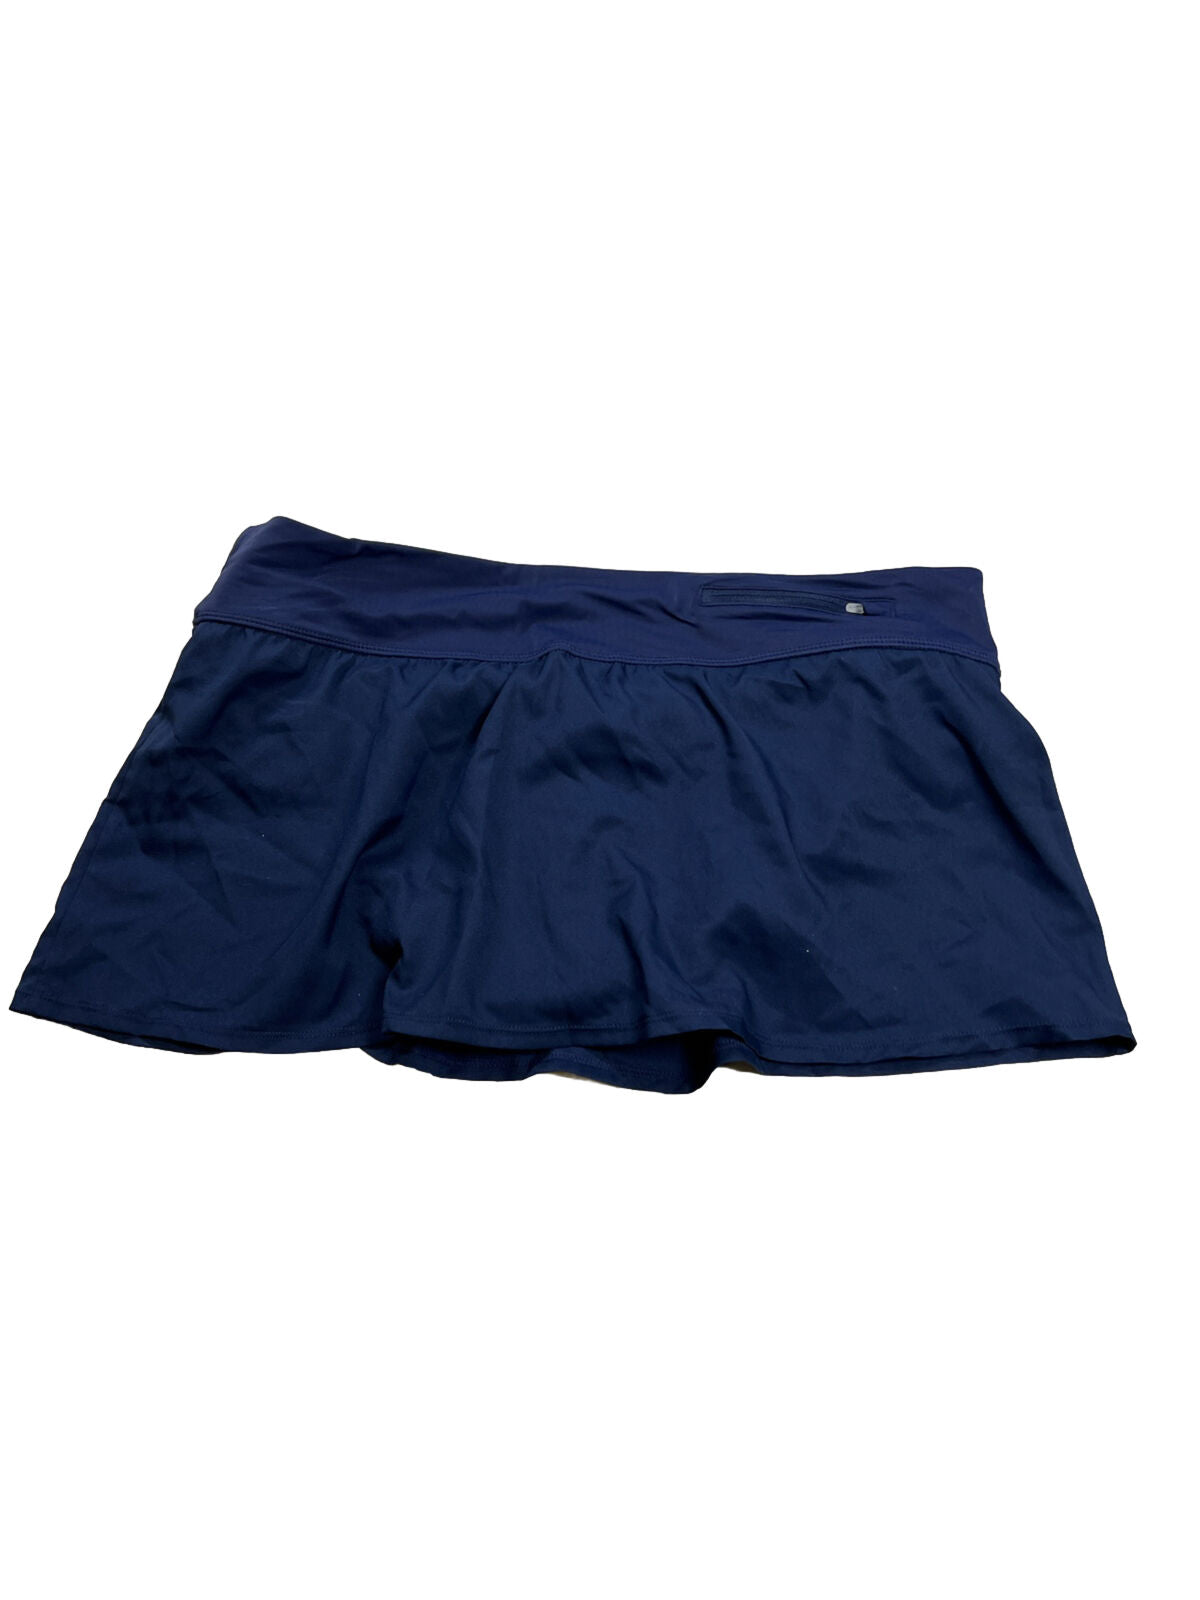 Nike Women's Navy Blue Swim Boardskirt - XL